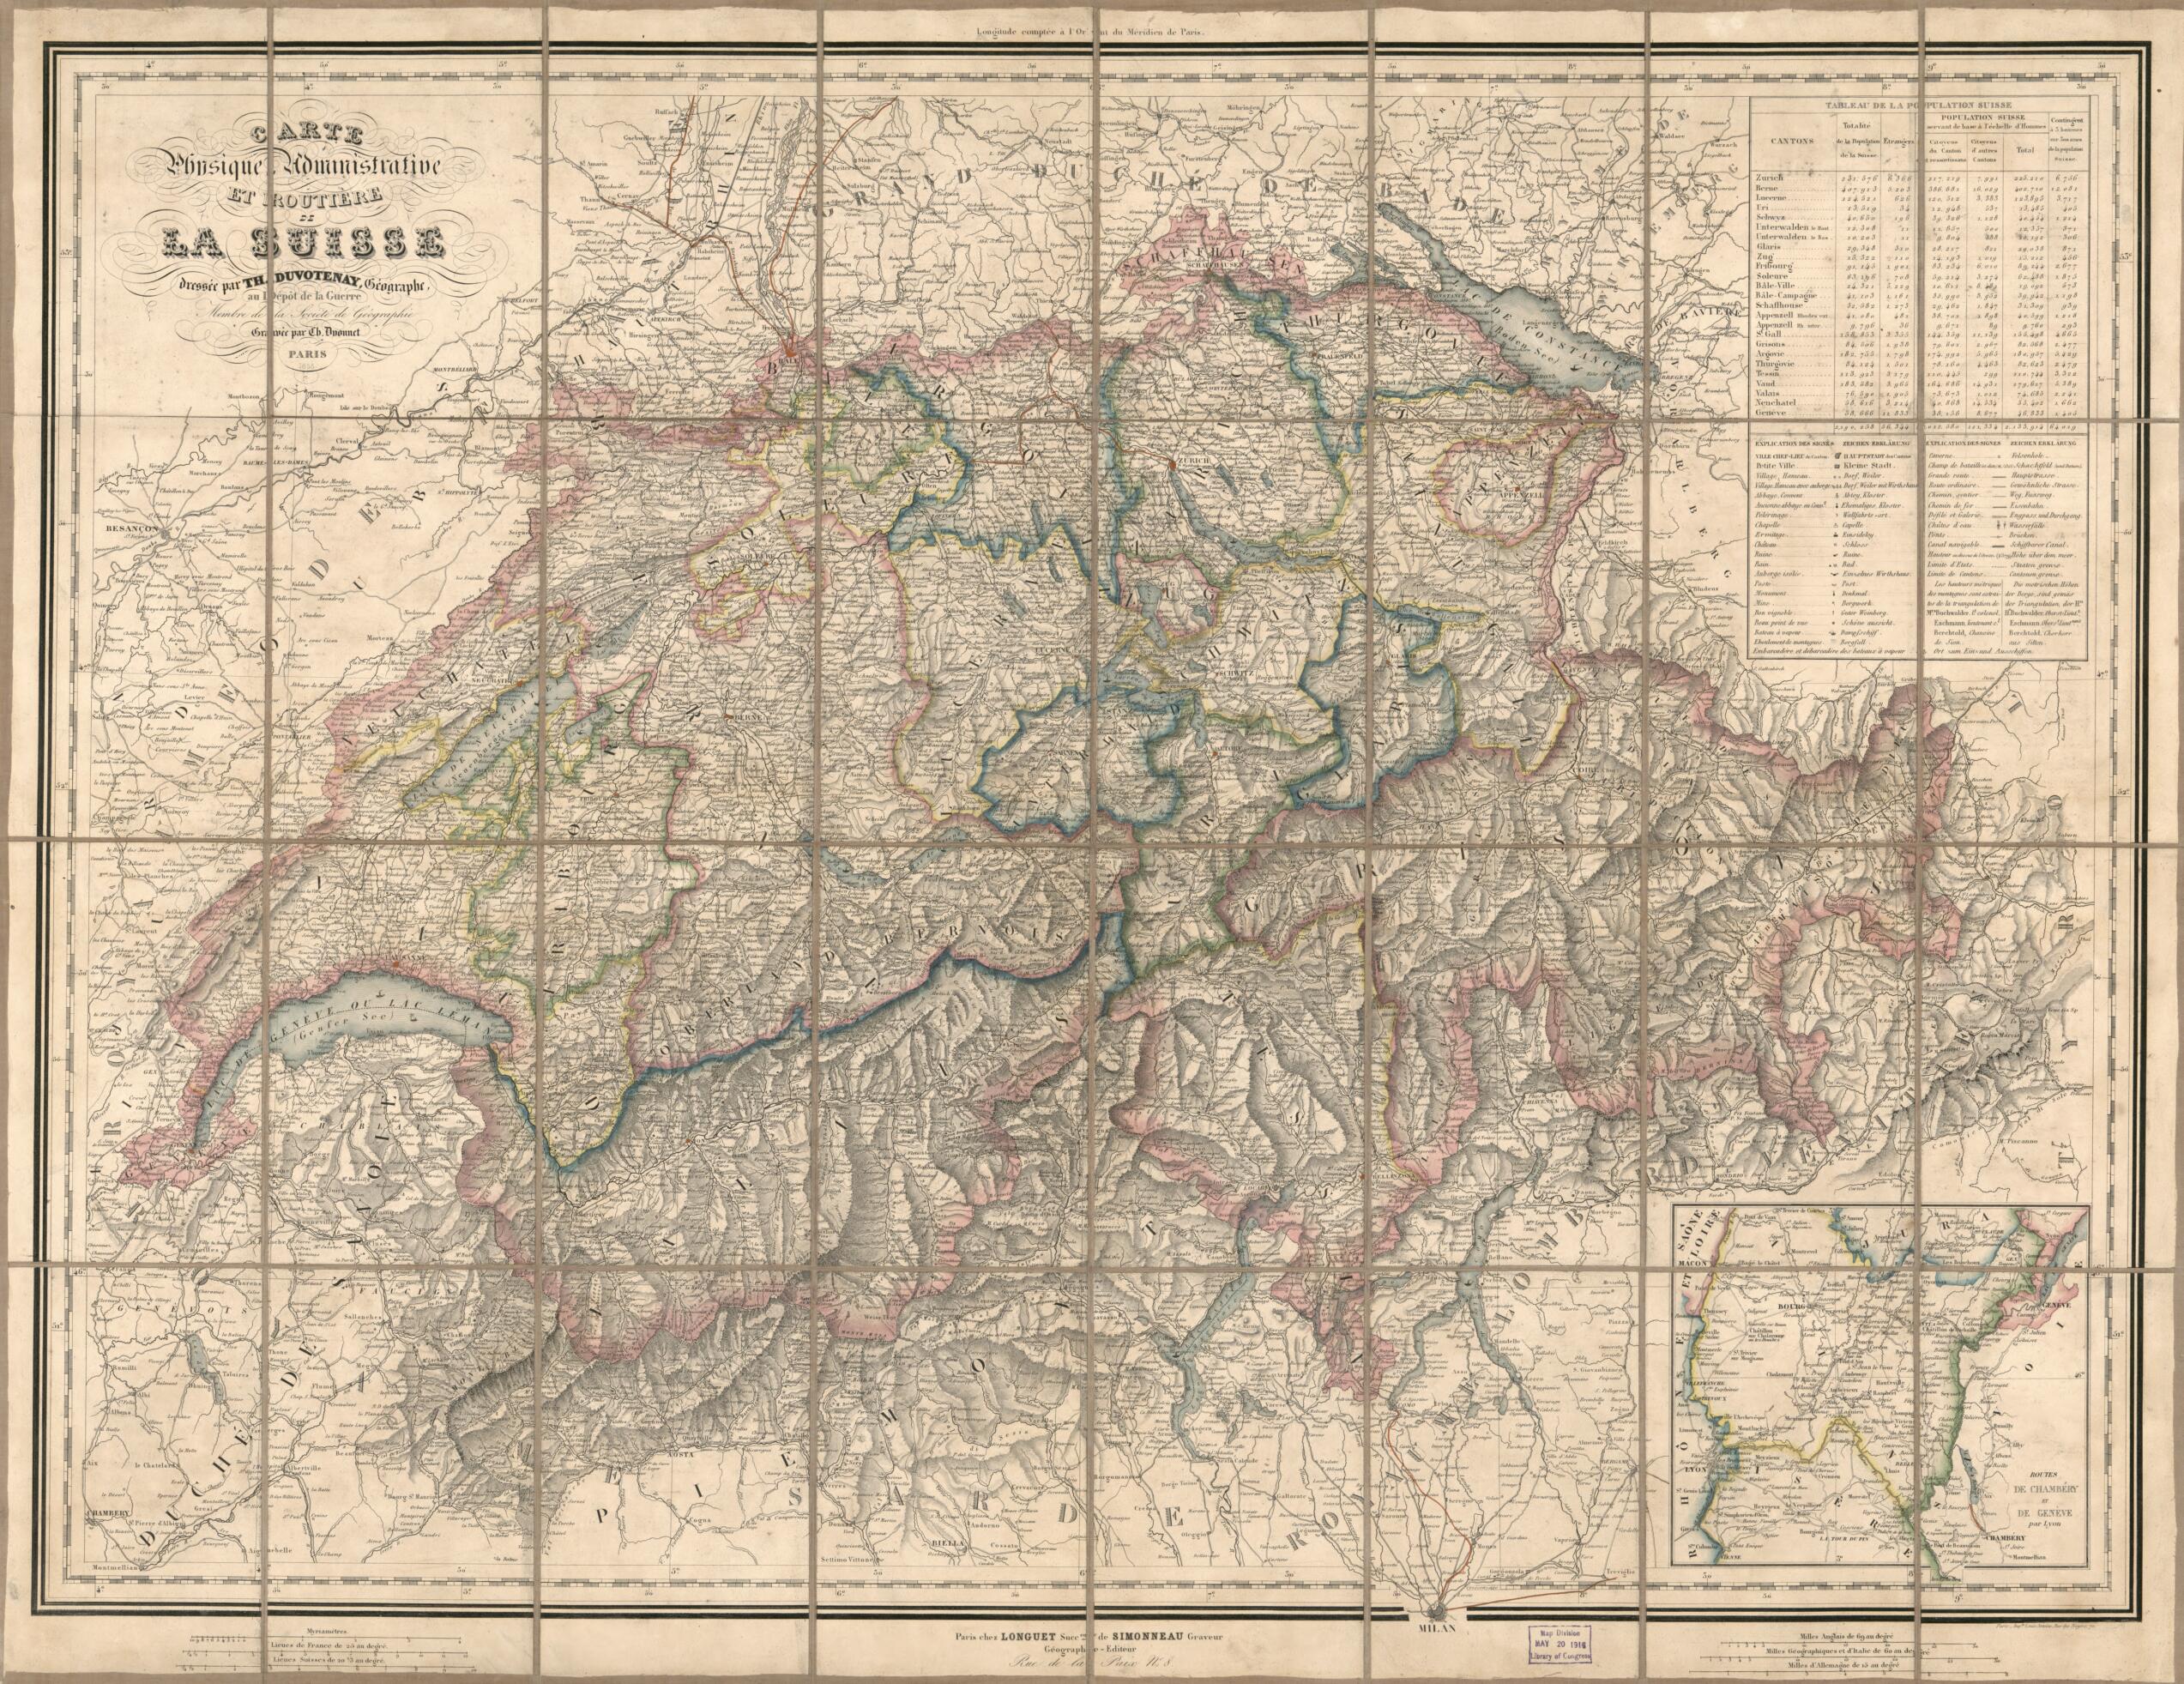 This old map of Carte Physique, Administrative Et Routière De La Suisse from 1855 was created by Th. (Thunot) Duvotenay, Ch Dyonnet, Millard Fillmore,  Imprimerie Lemercier Et Cie in 1855